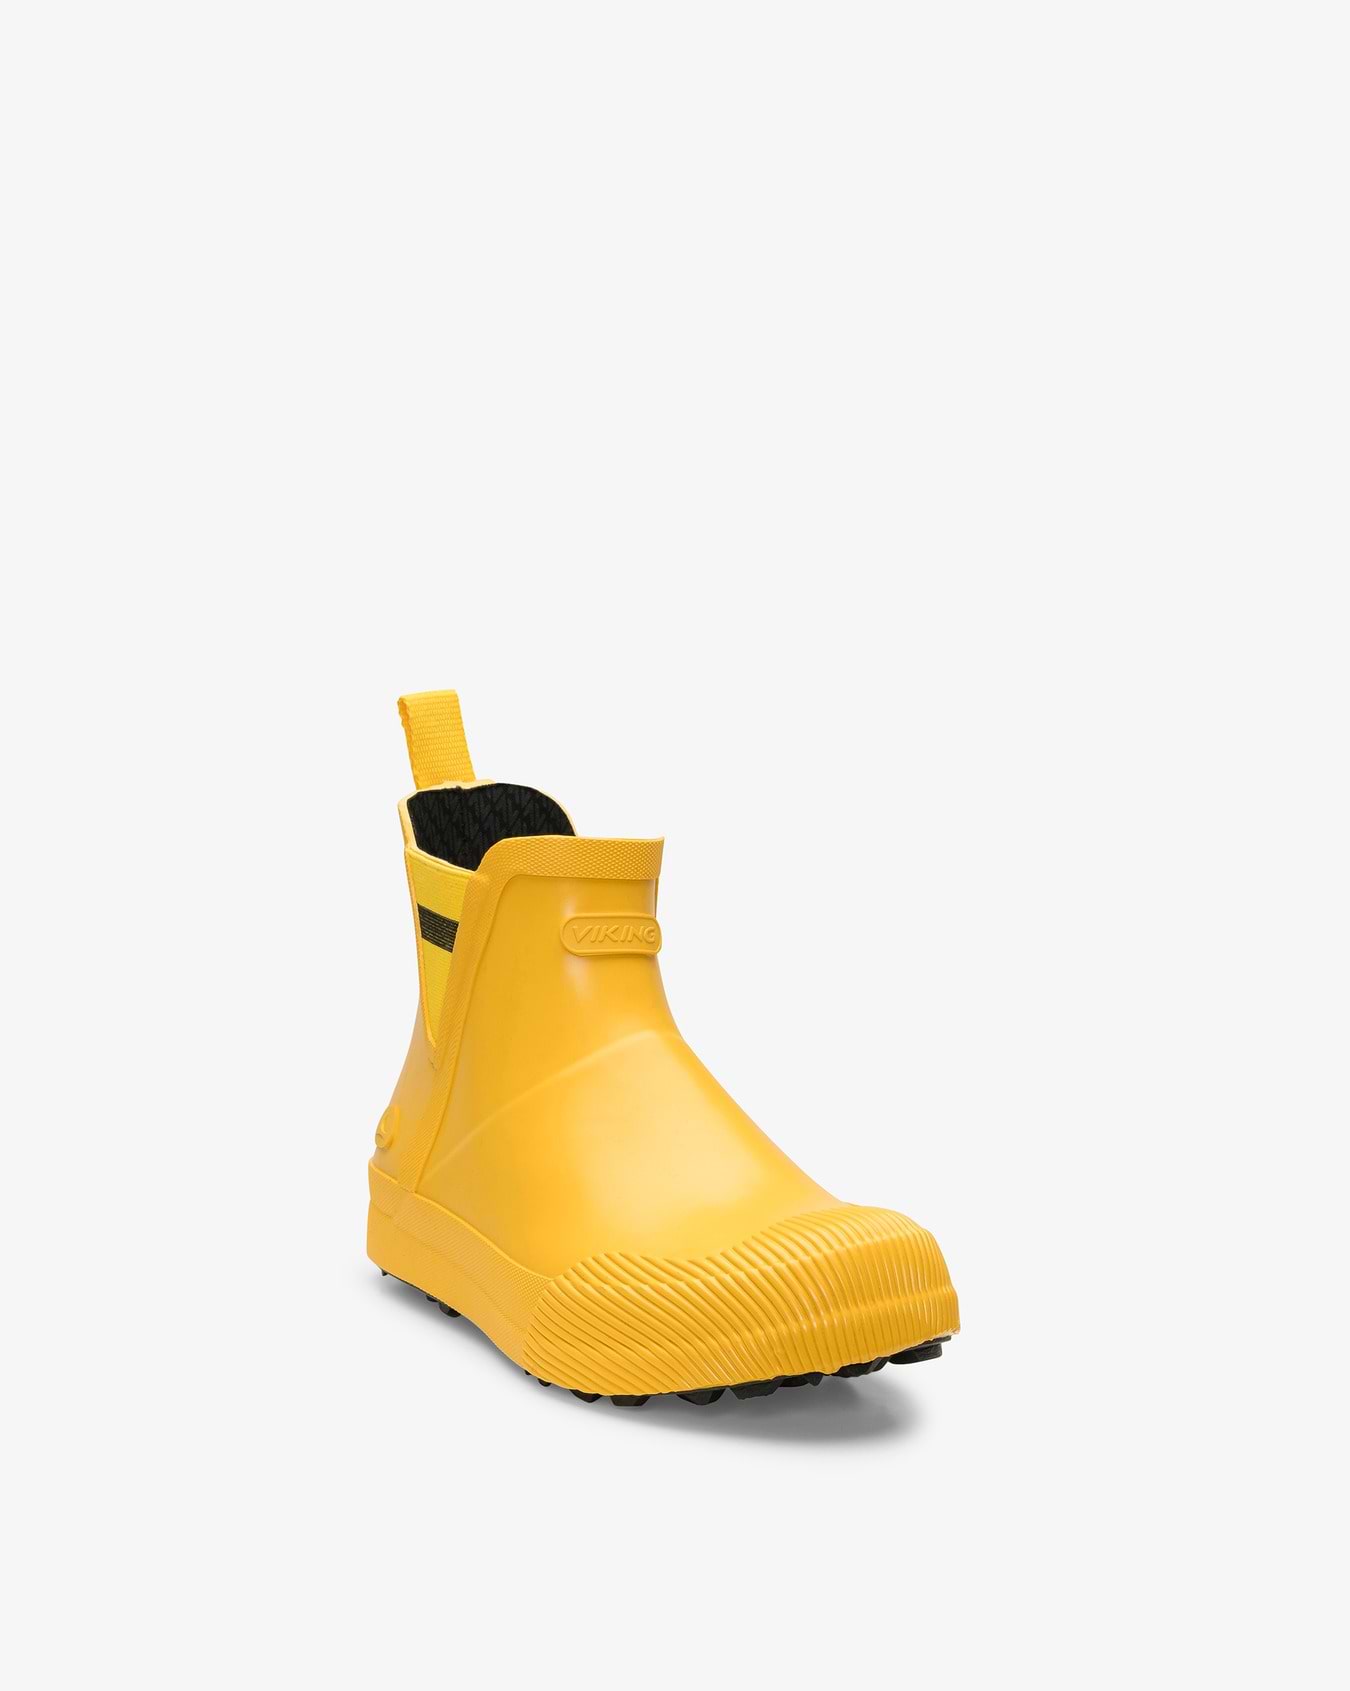 Ekeberg Yellow/Black Rubber Boot